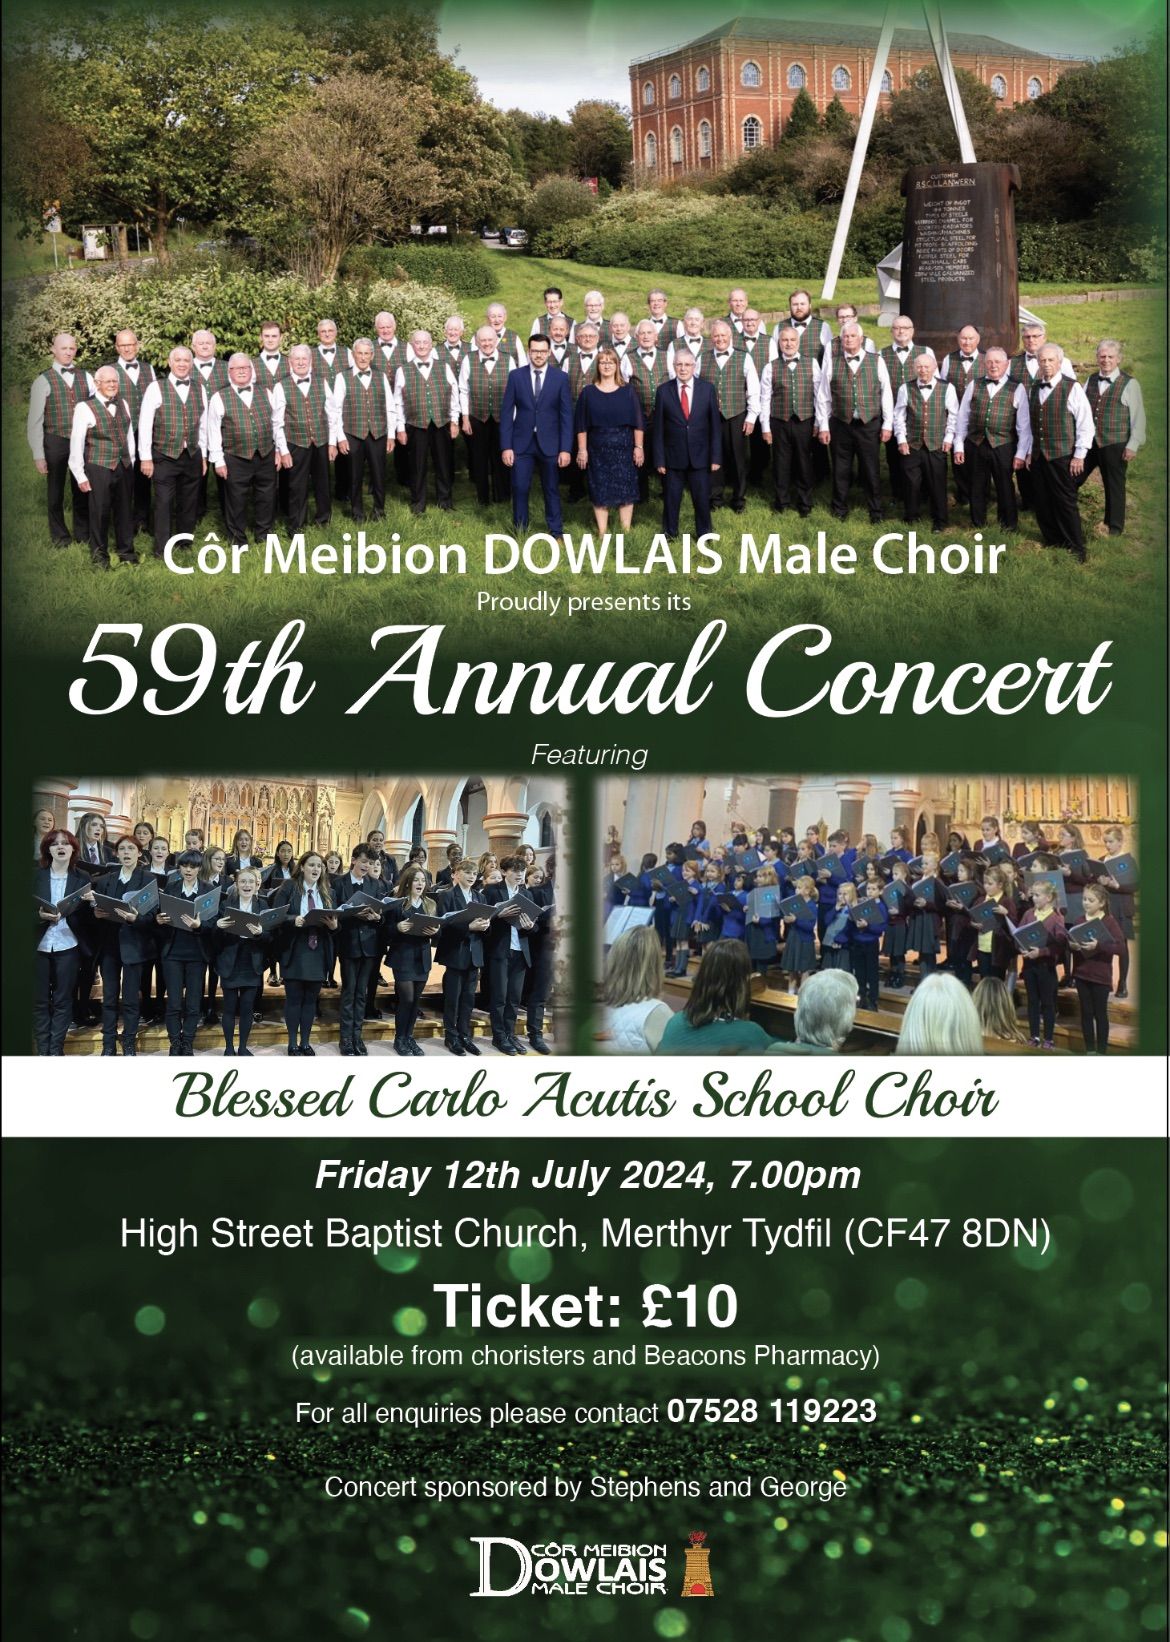 59th Annual Concert with BCA School Choir